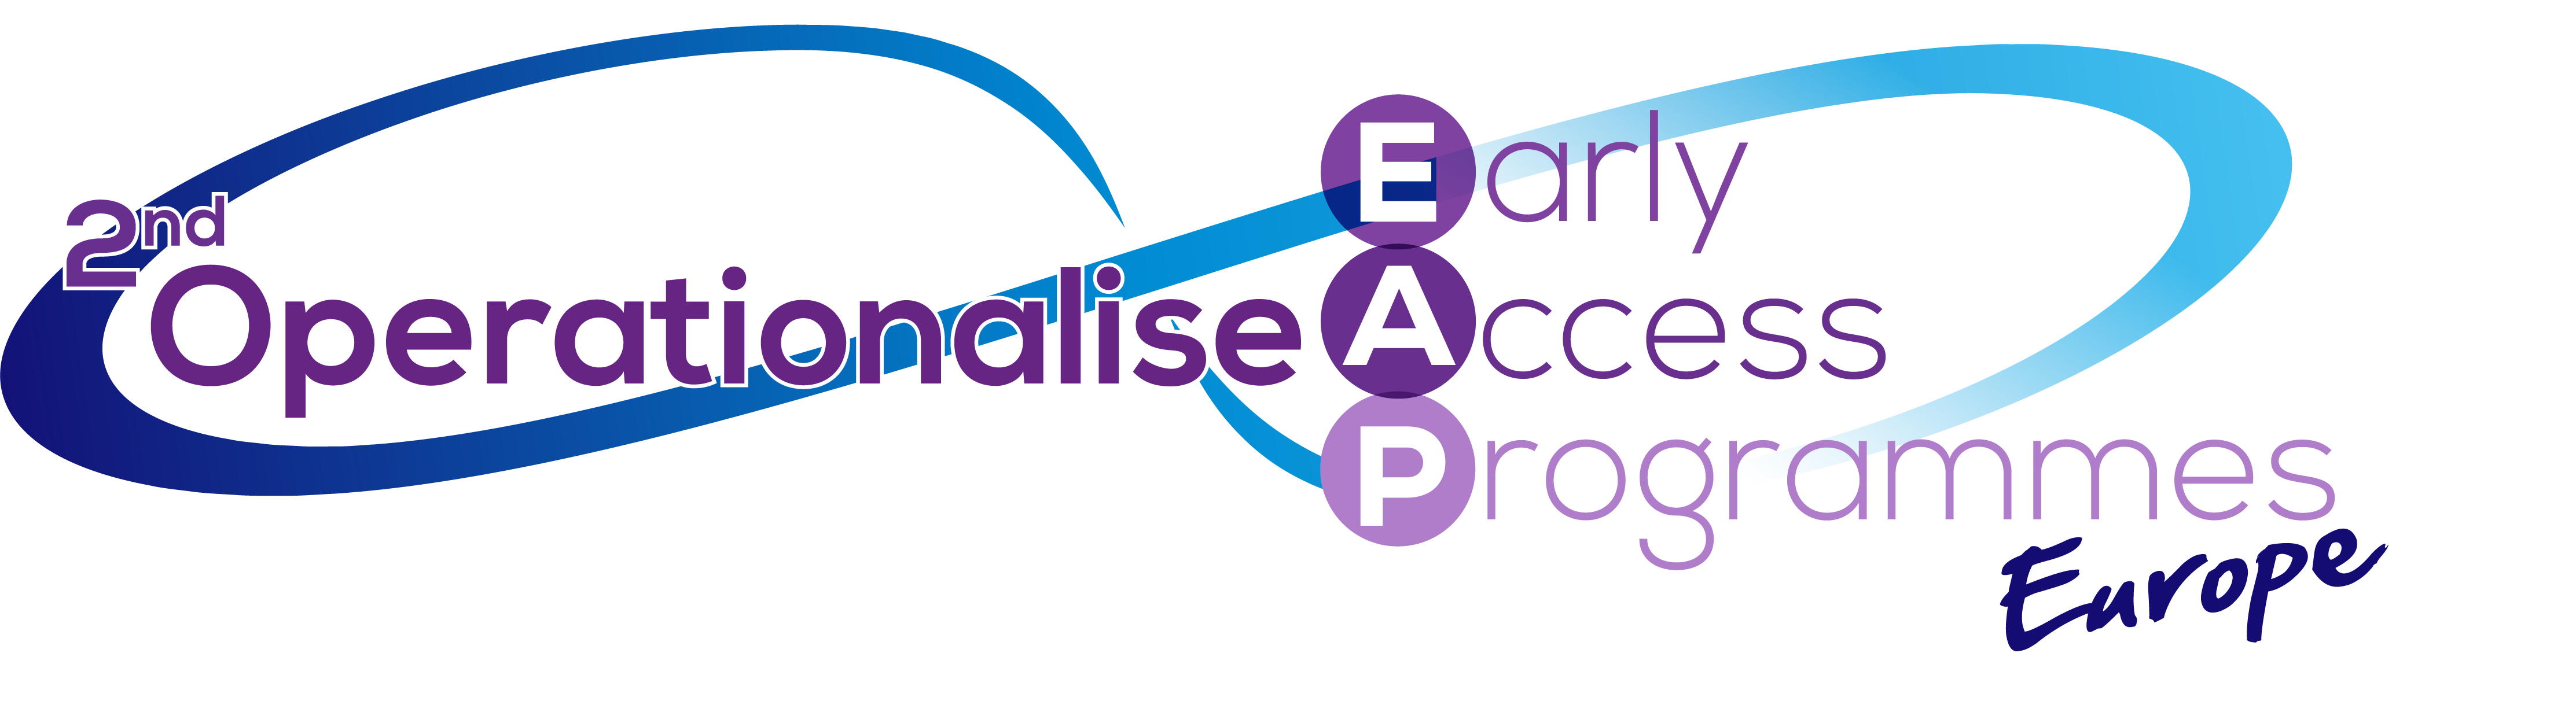 HW230328 2nd Operationalise Early Access Programmes Europe logo